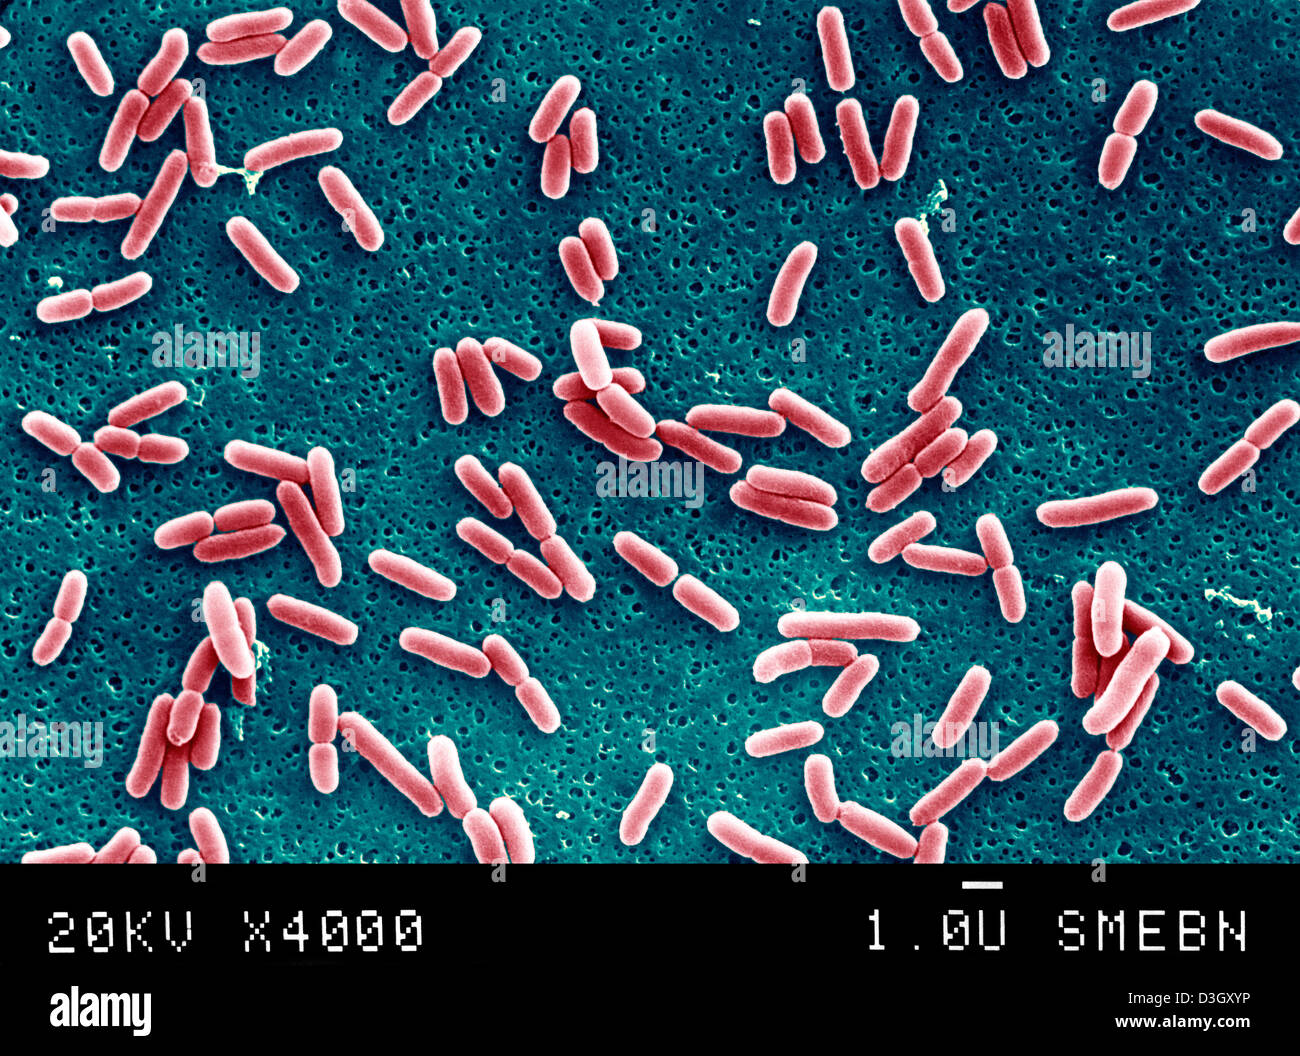 Escherichia coli micrograph hi-res stock photography and images - Alamy